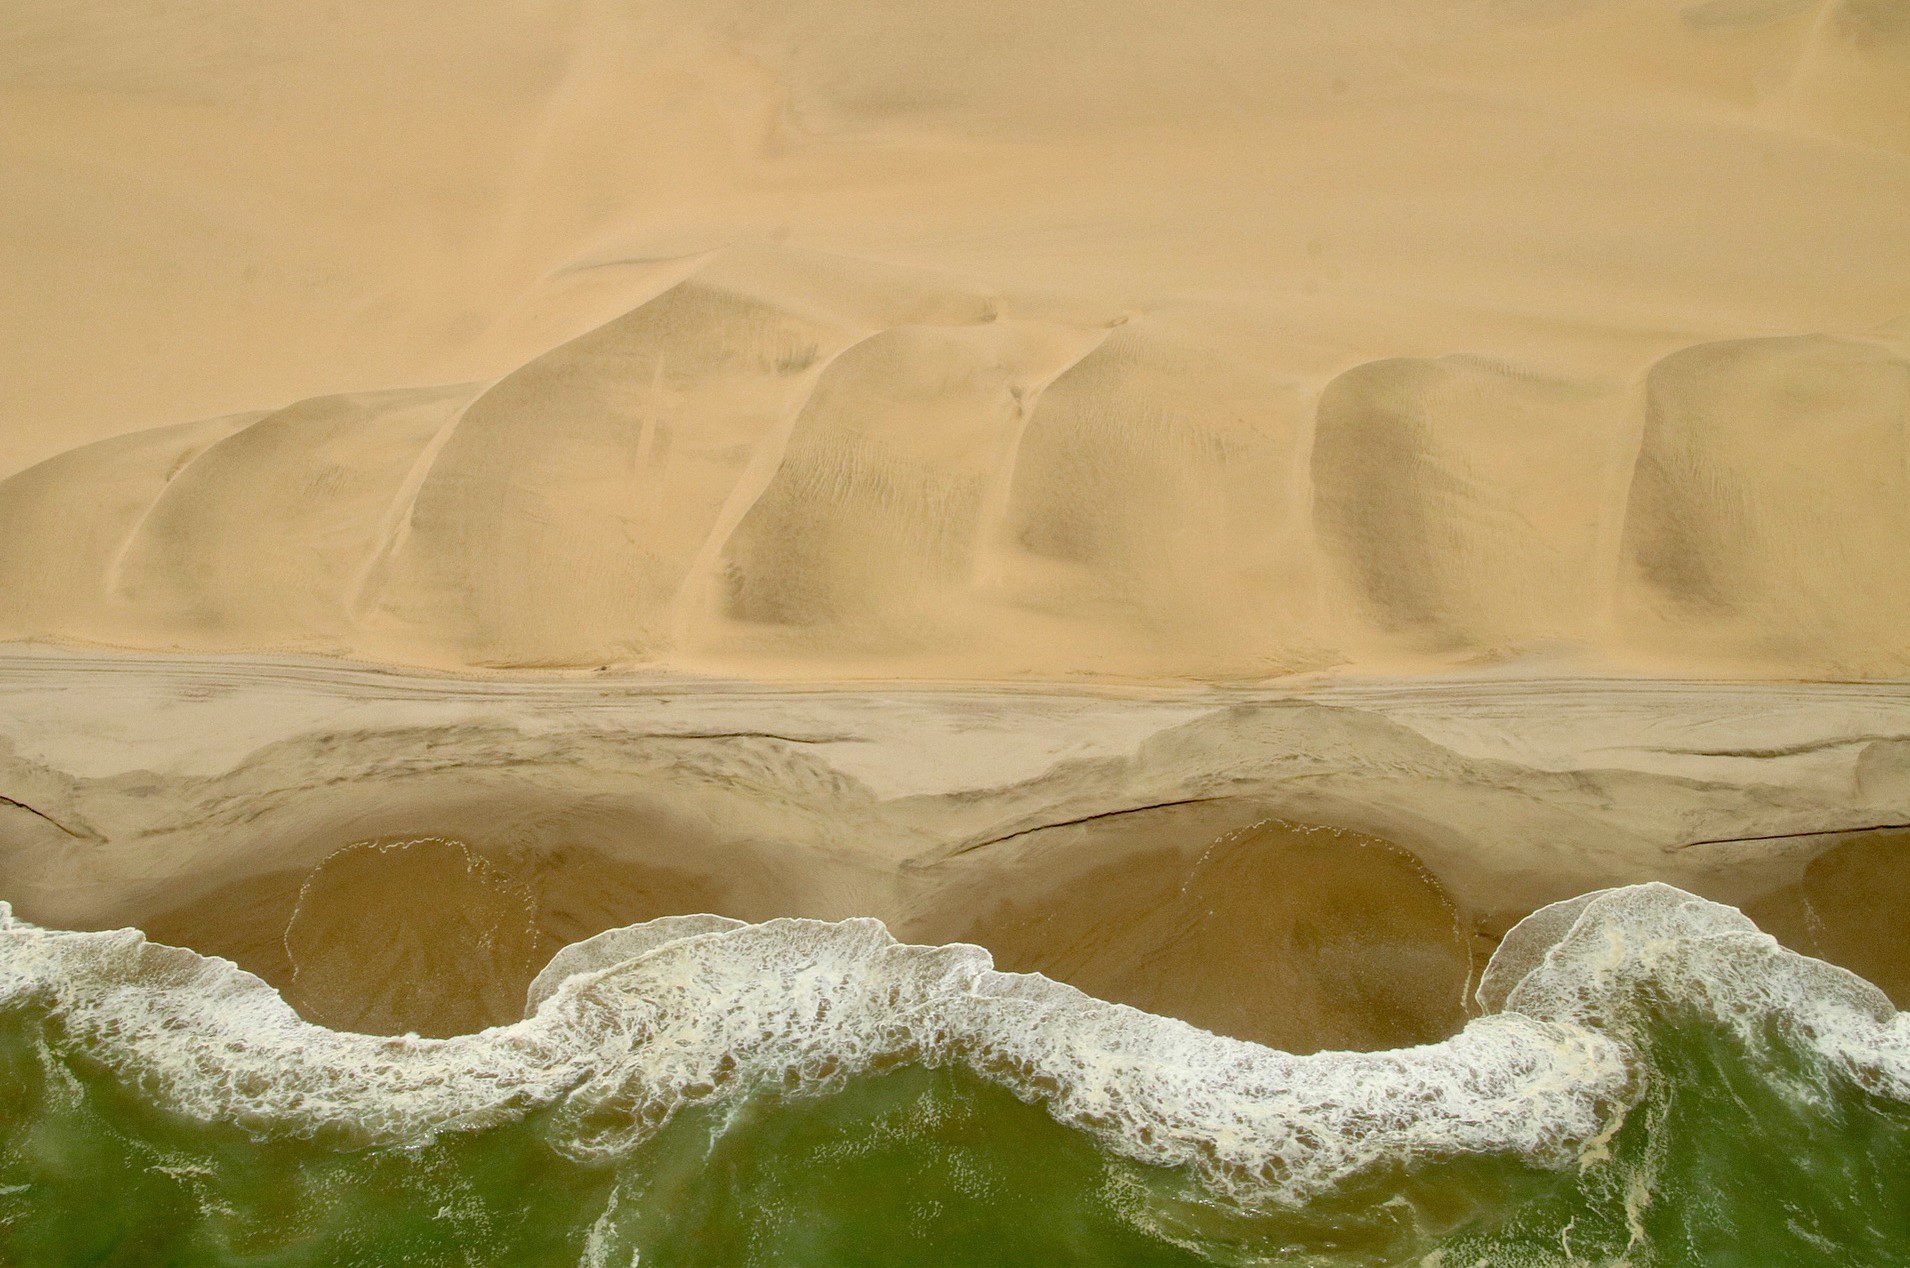 Sandy shore of the Namibian coast line